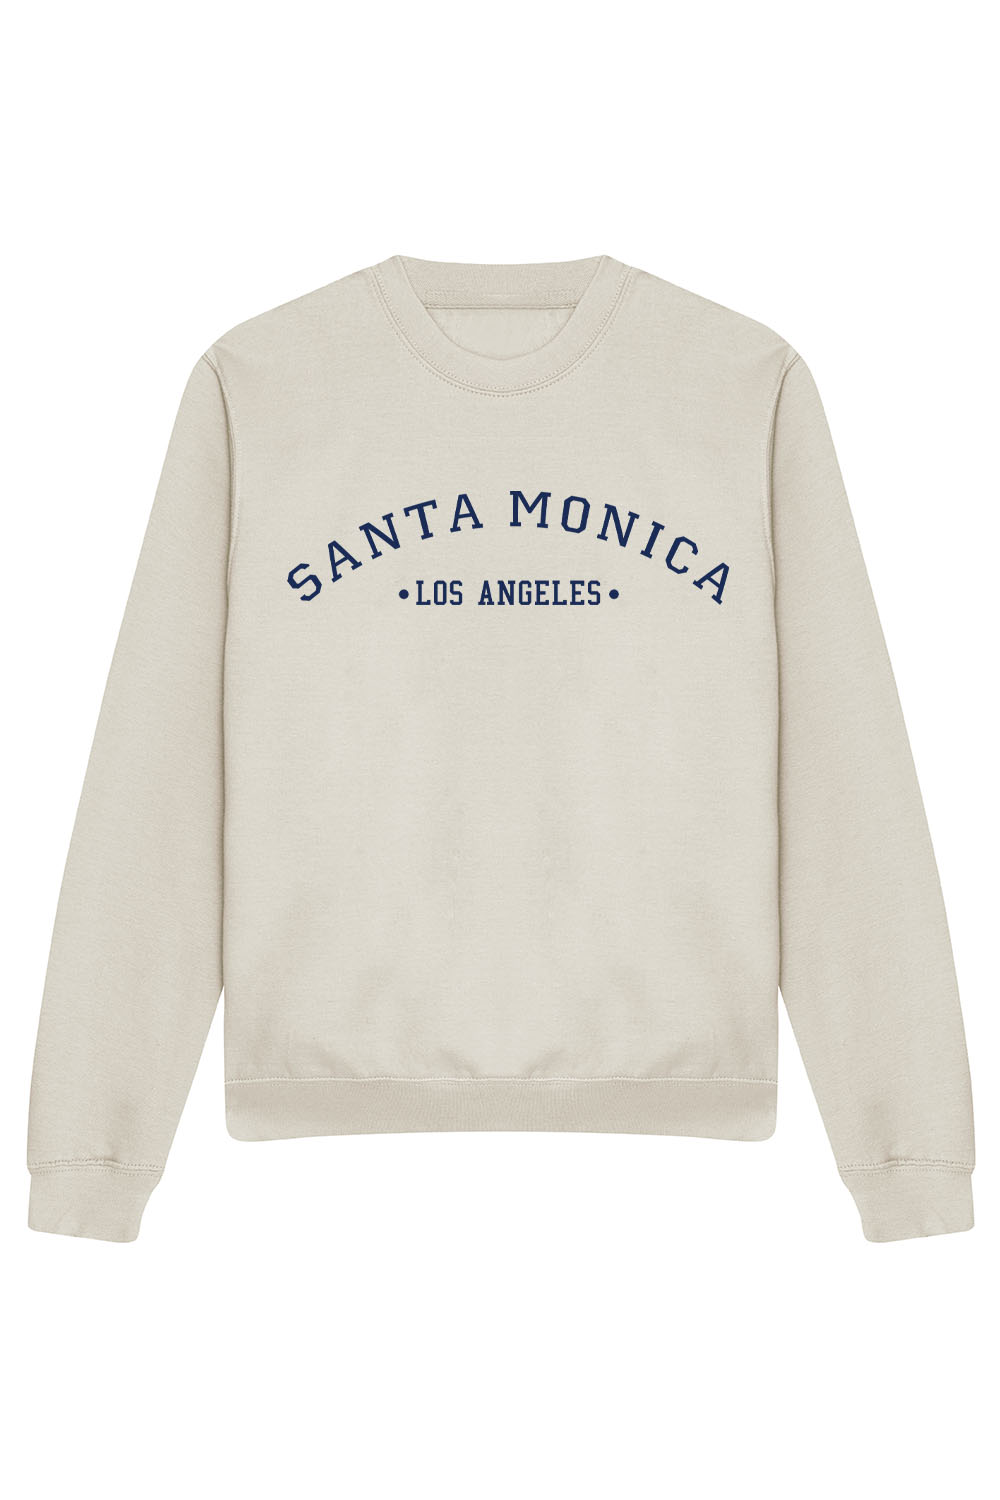 Santa Monica Sweatshirt In Natural Stone (Custom Pack)